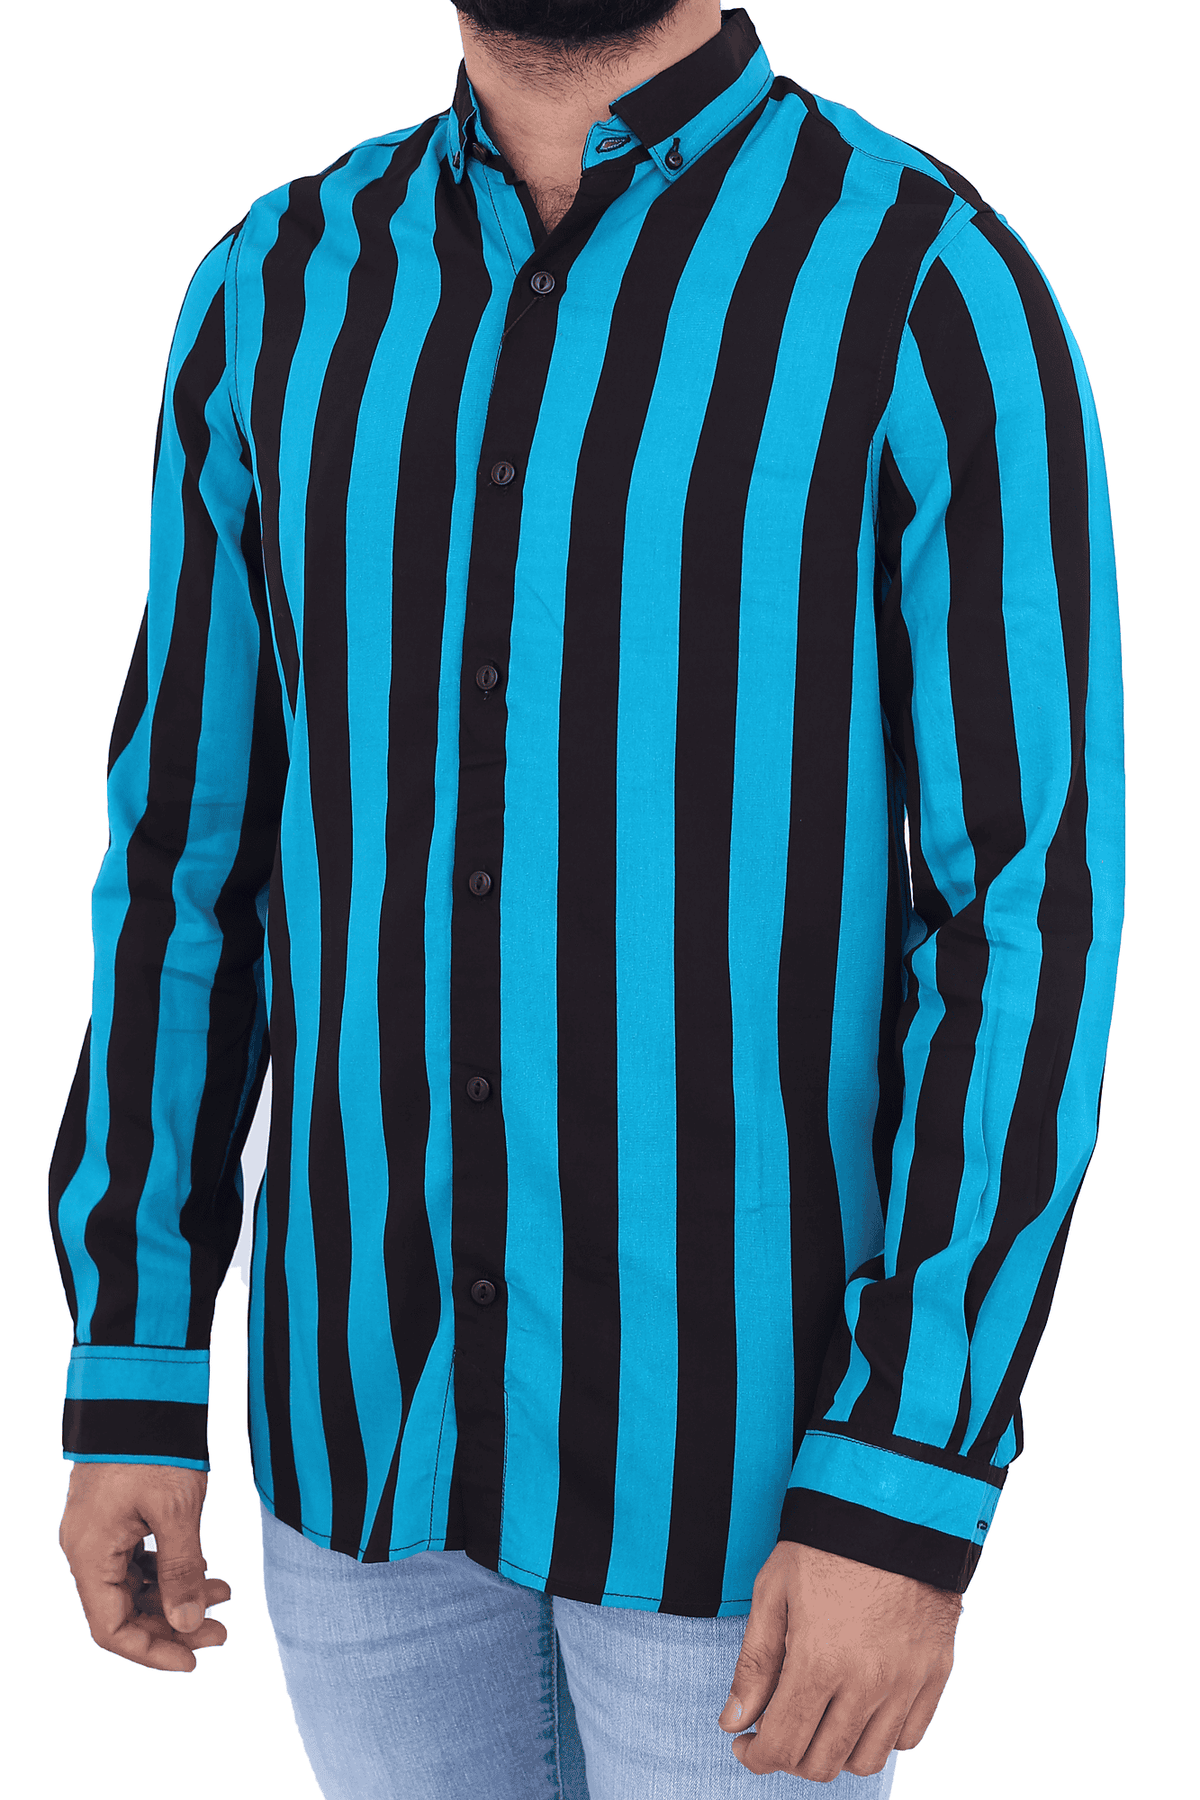 Men's Casual Shirt SHC-1744 Green Stripe